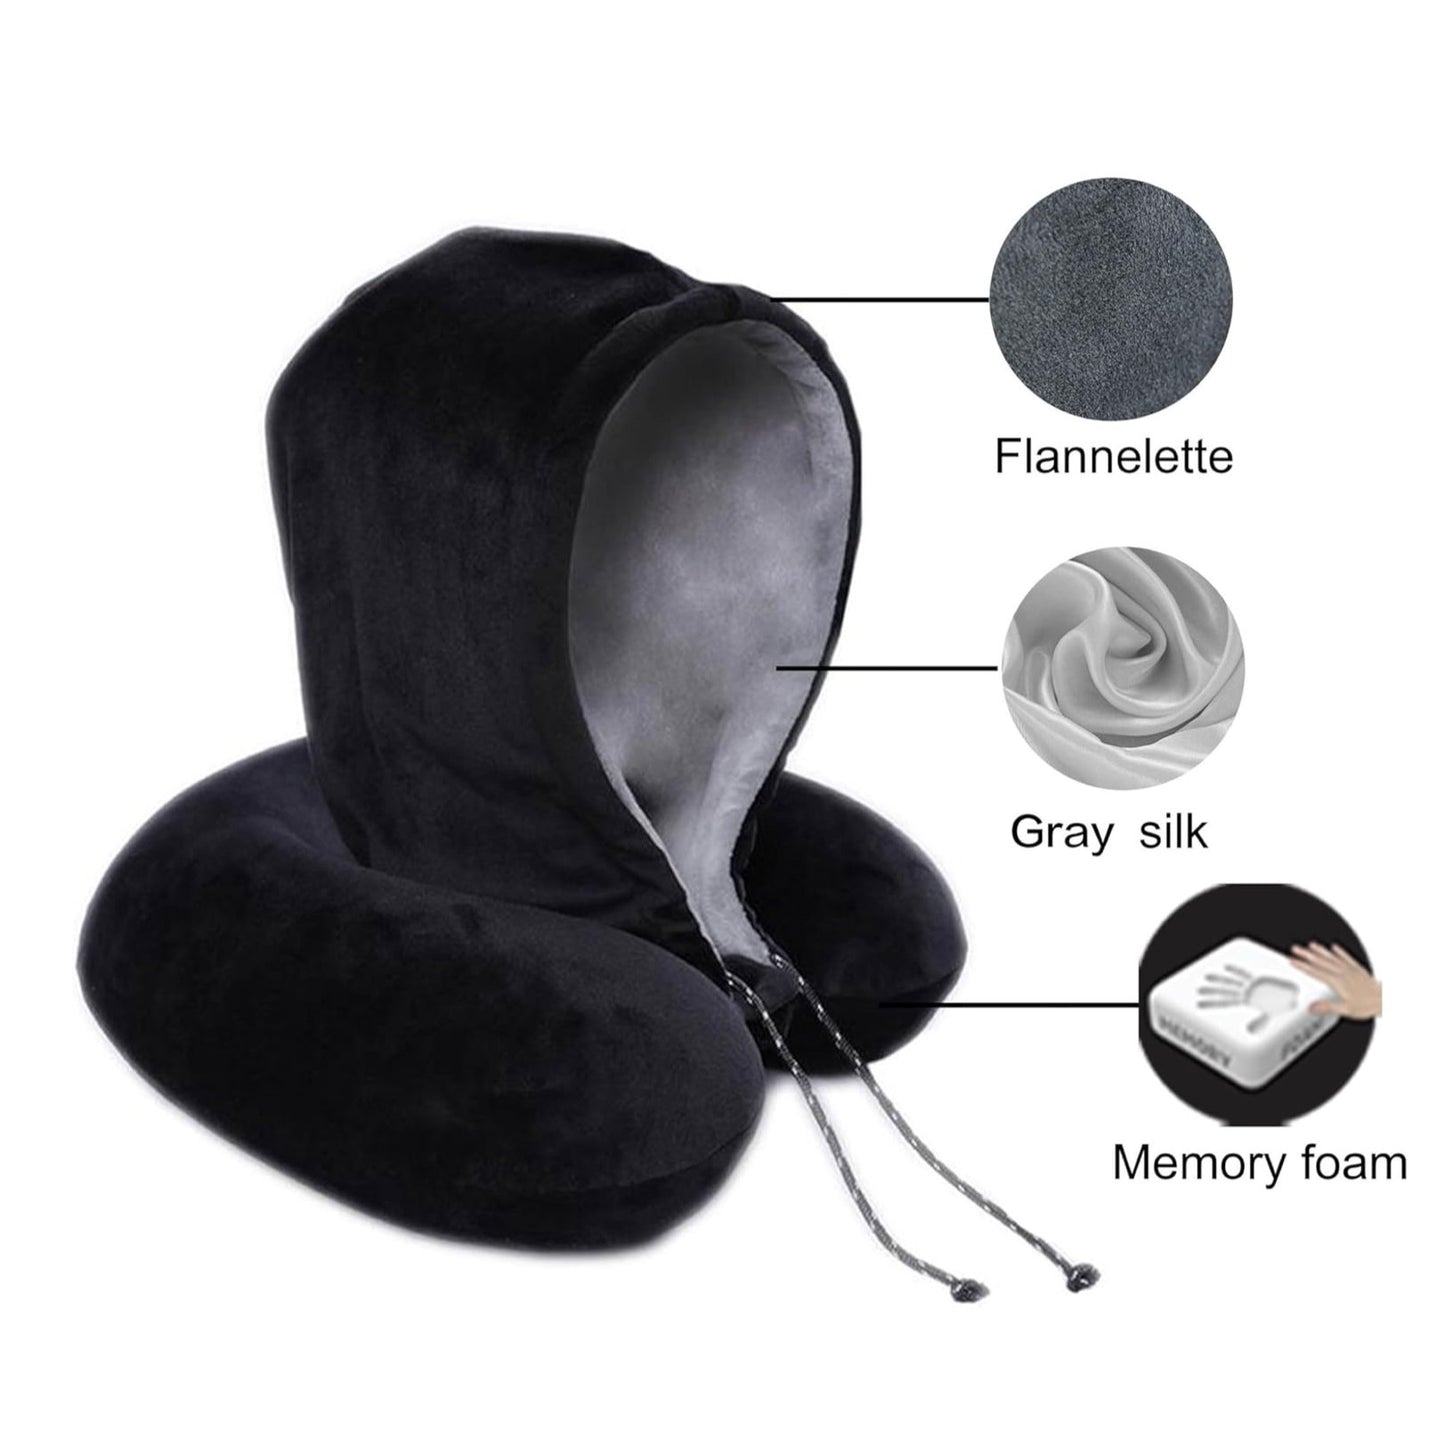 HYBRICA GO-ON Premium Travel Hoodie Neck Pillow with Memory Foam